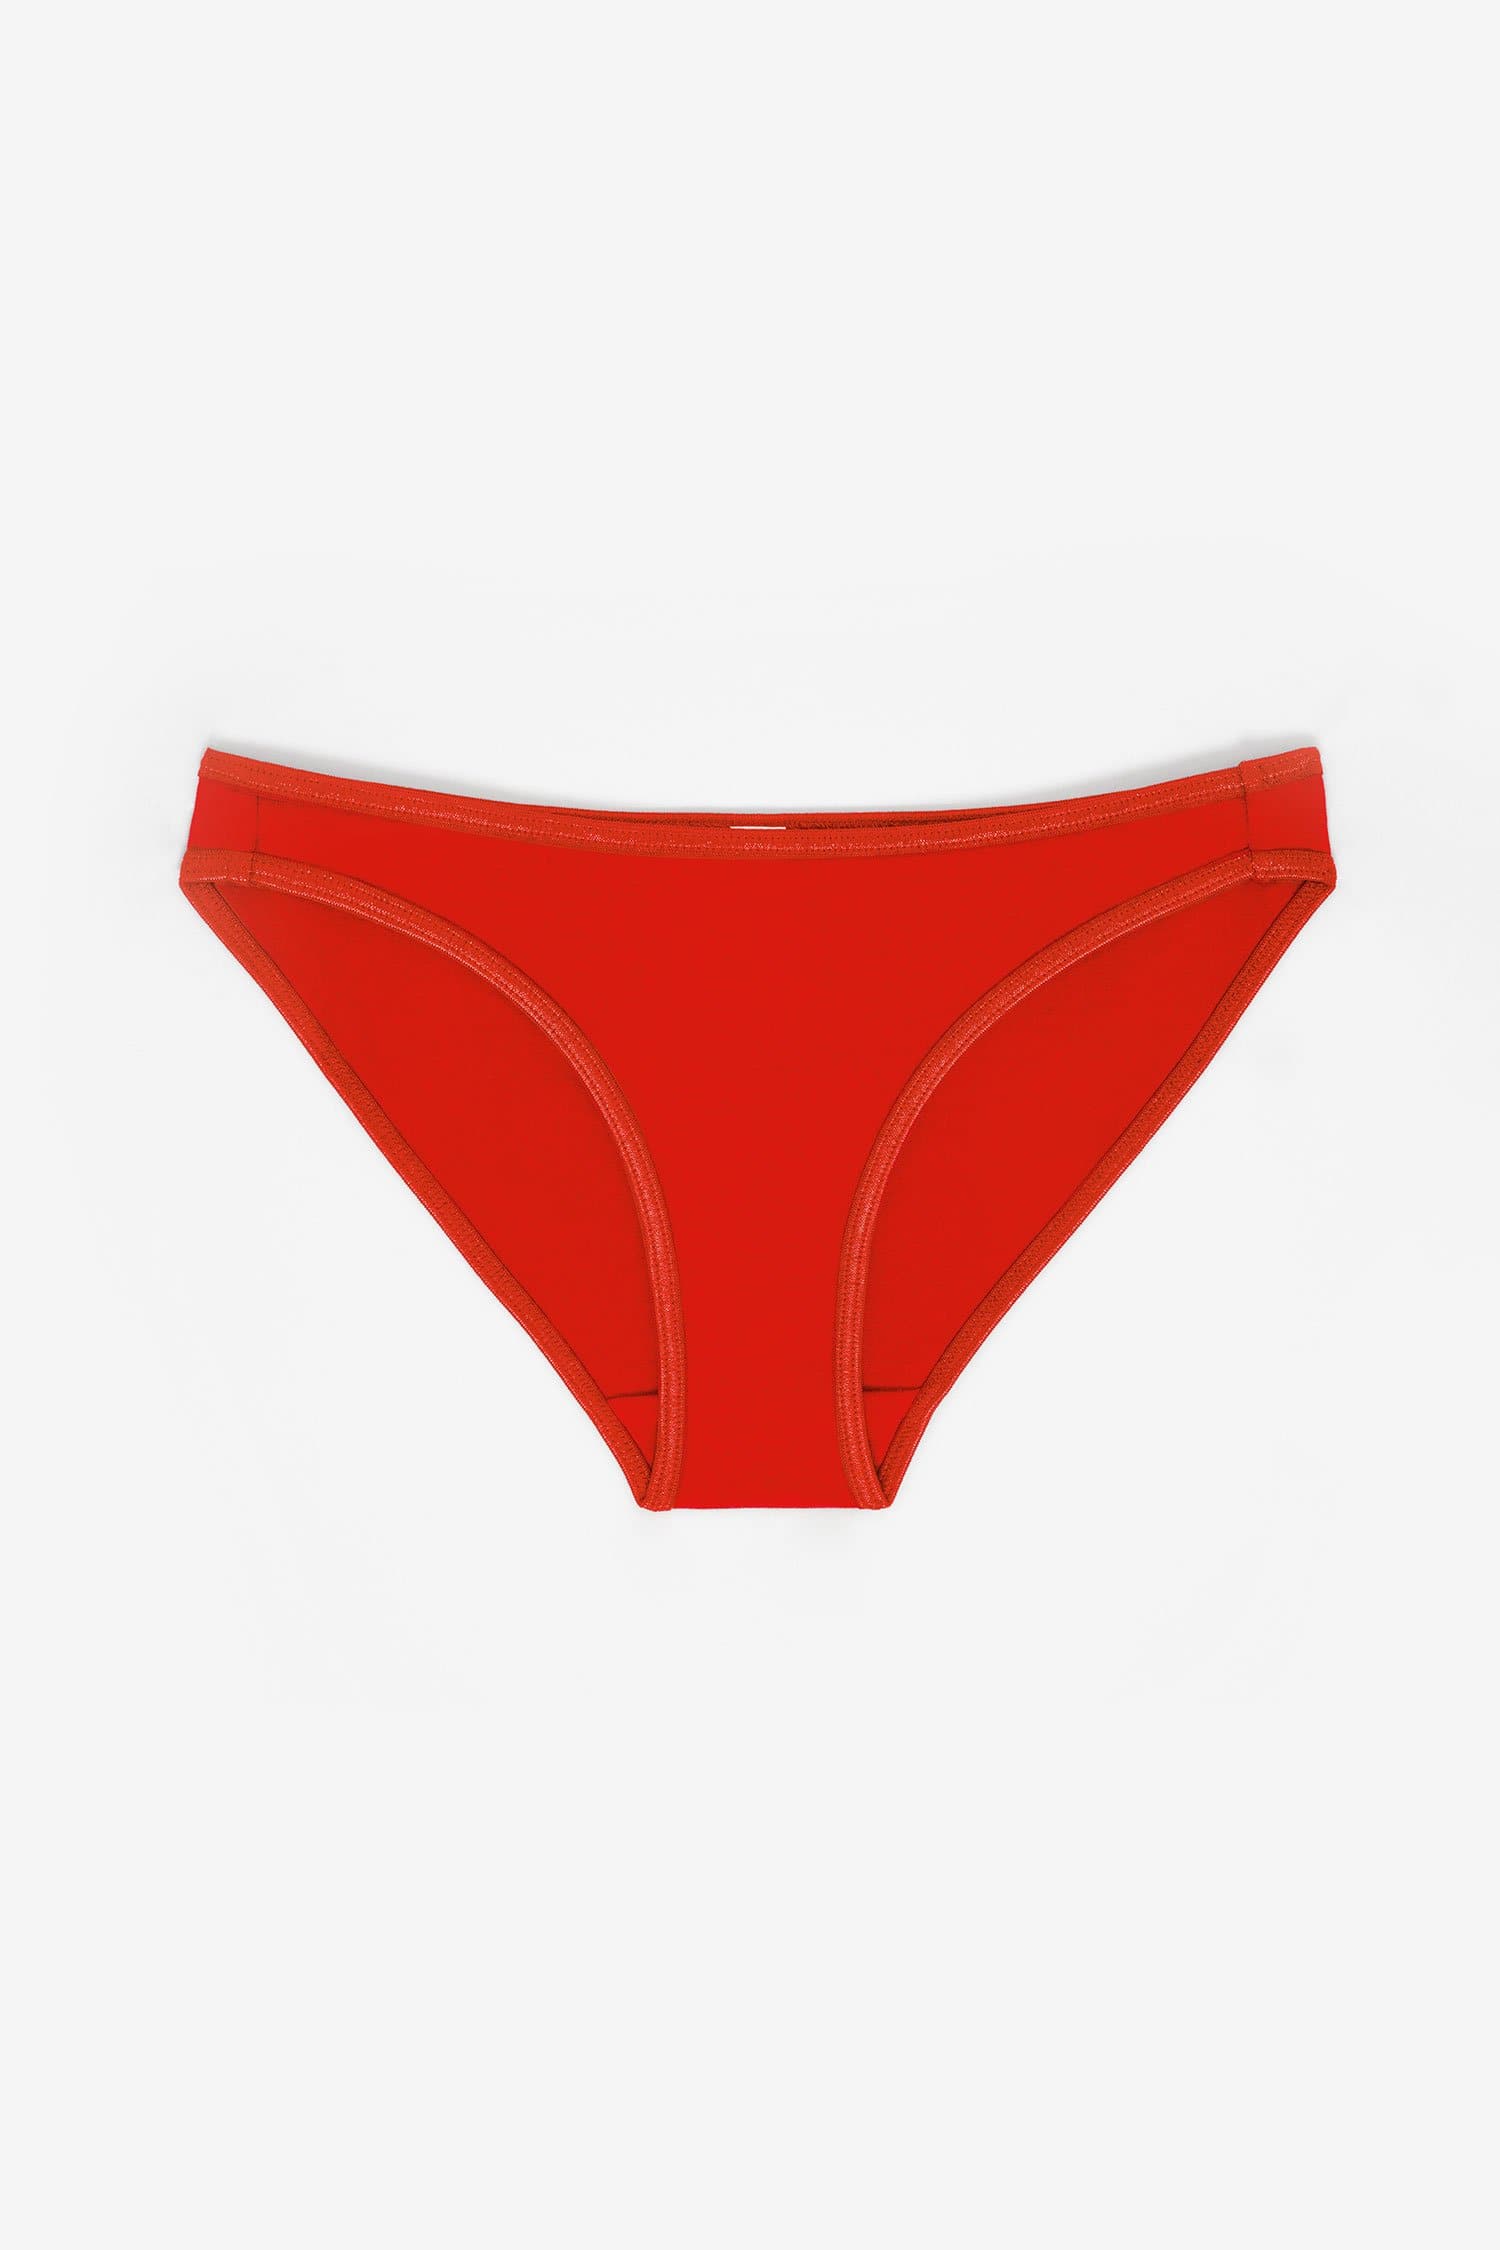  Retro Filipino American Flag Women's Breathable Underwear  Bikini Panties Low Waist Panties Stretch Briefs Undies for Women : Sports &  Outdoors